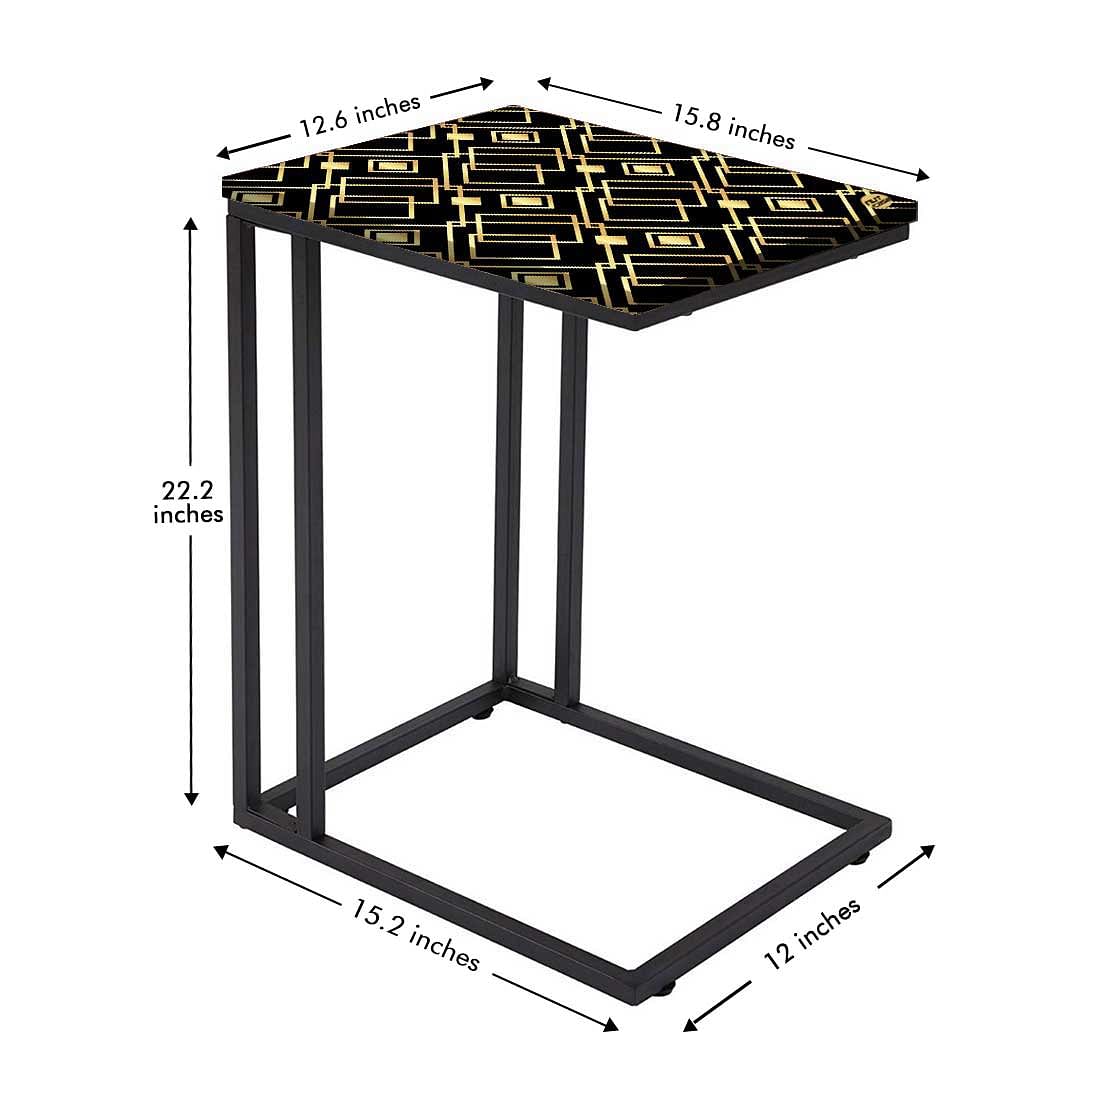 C Shaped Table Sofa  - Geometric Nutcase